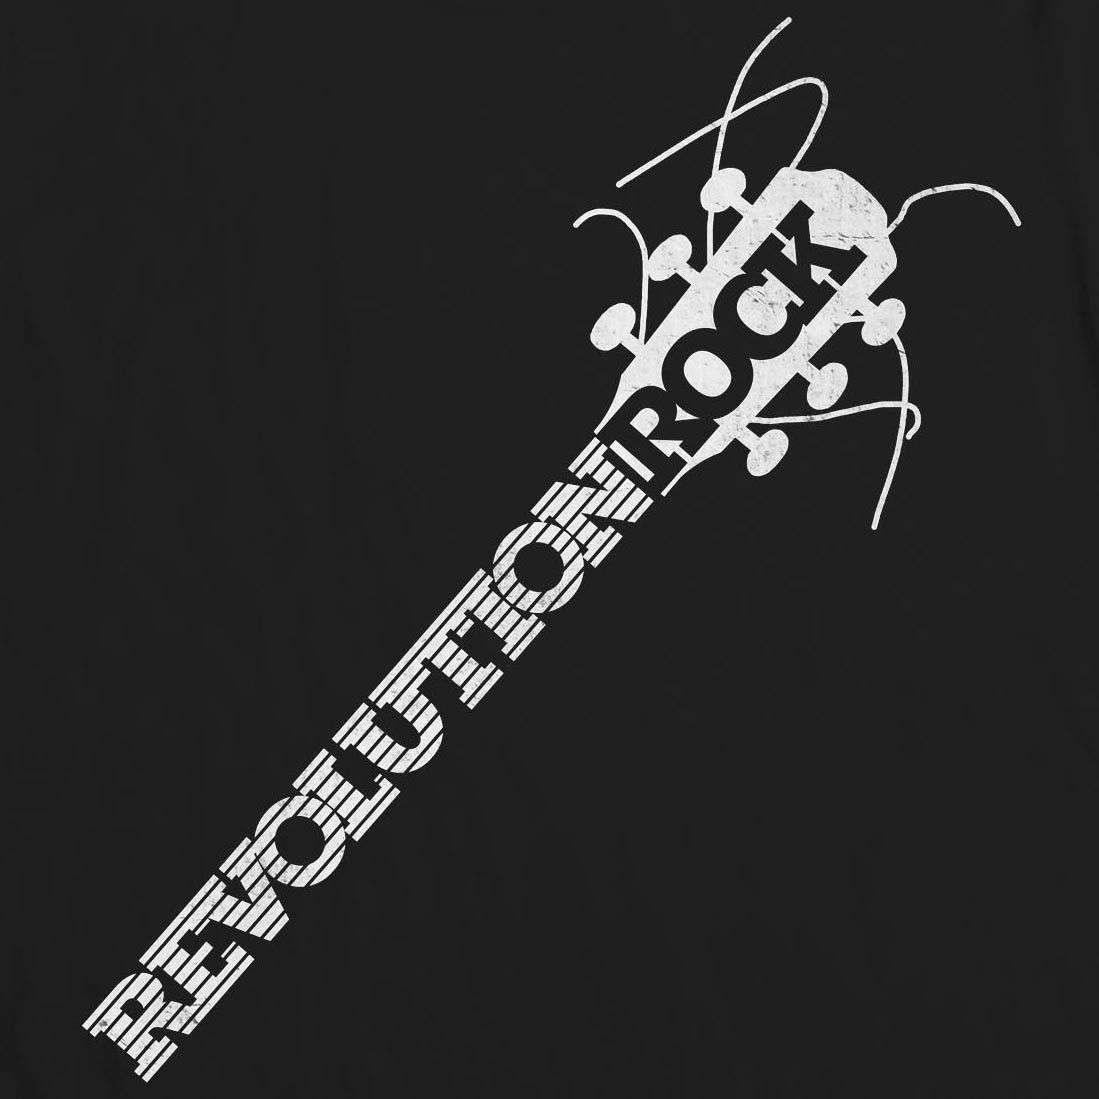 Revolution Rock Unisex T-Shirt For Men And Women As Worn By Joan Jett And Kristen Stewart 8Ball